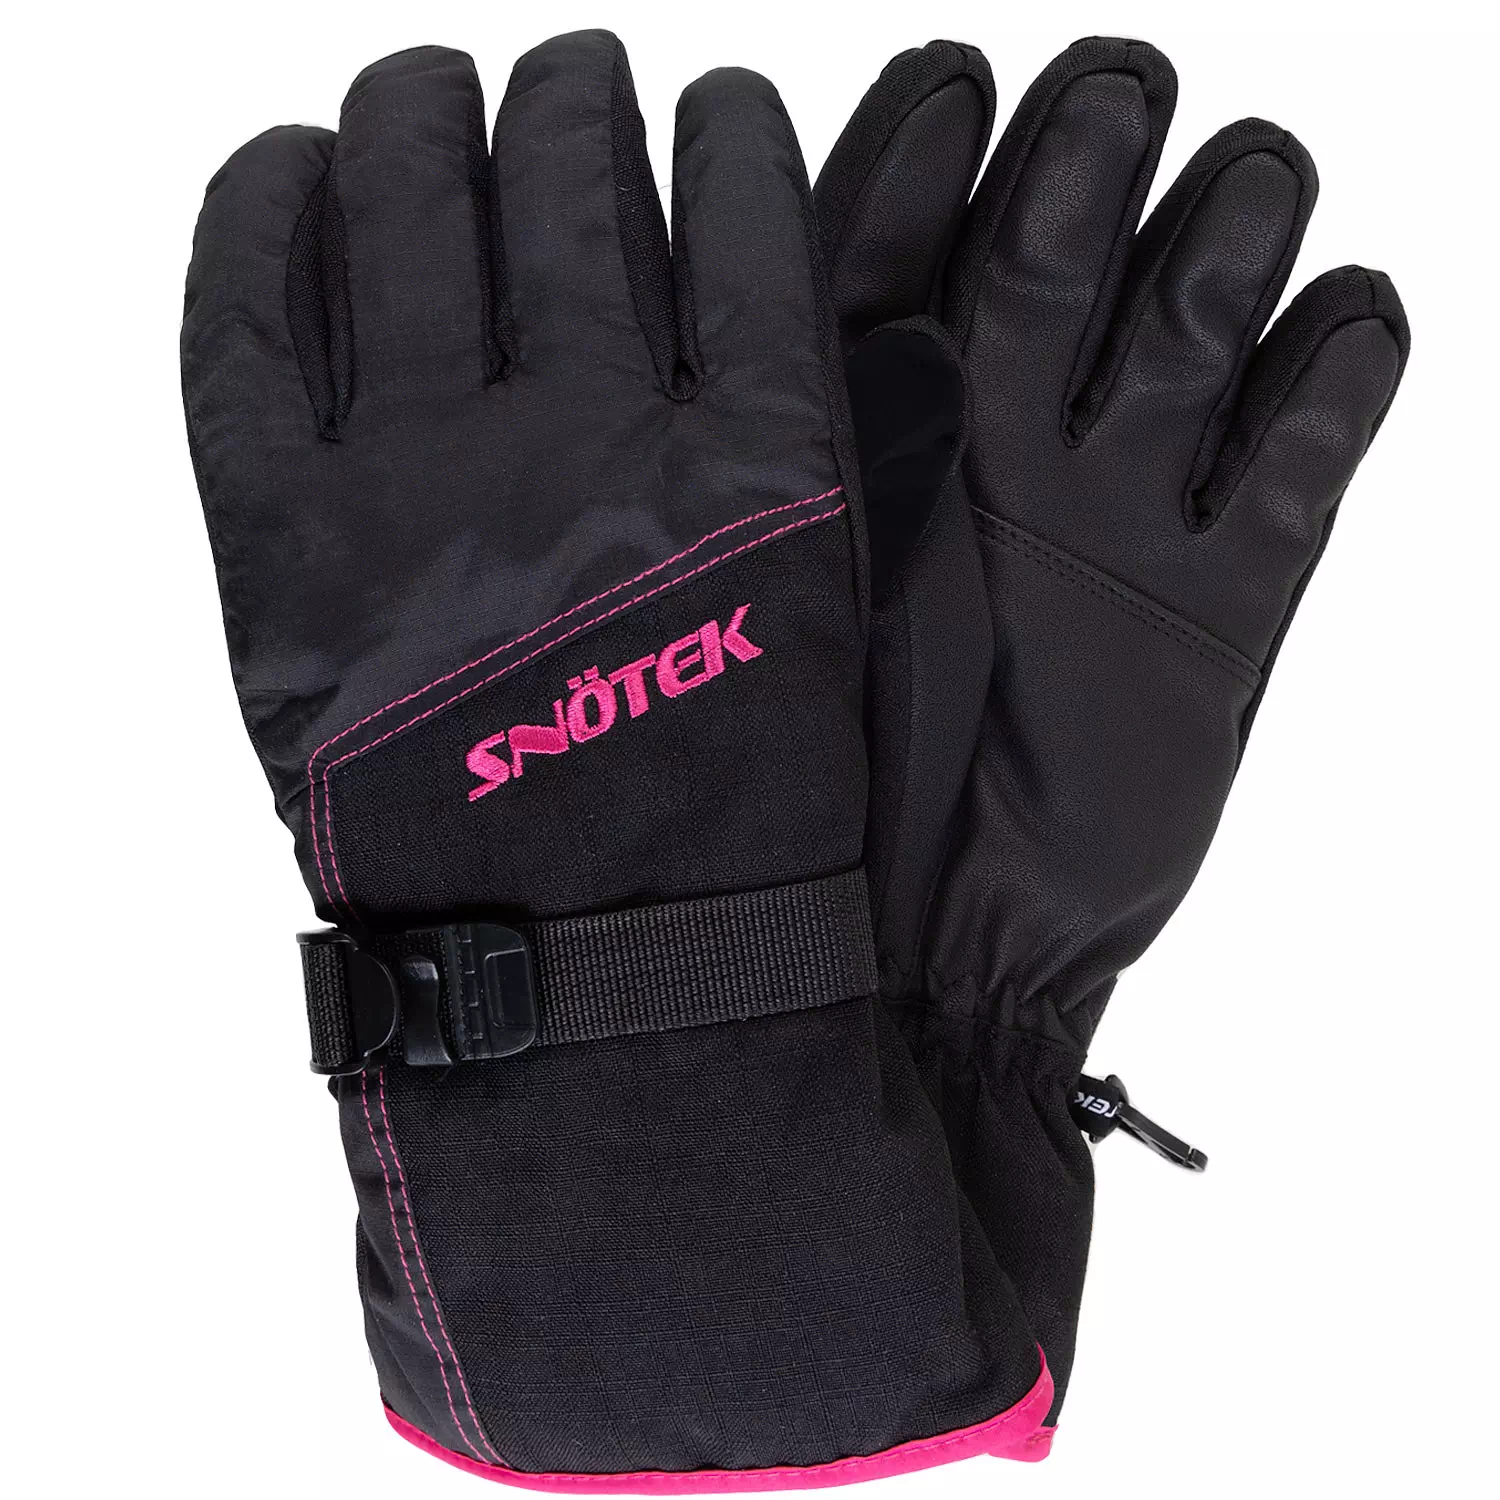 Snötek - Winter ski gloves with wrist leash, small (S)